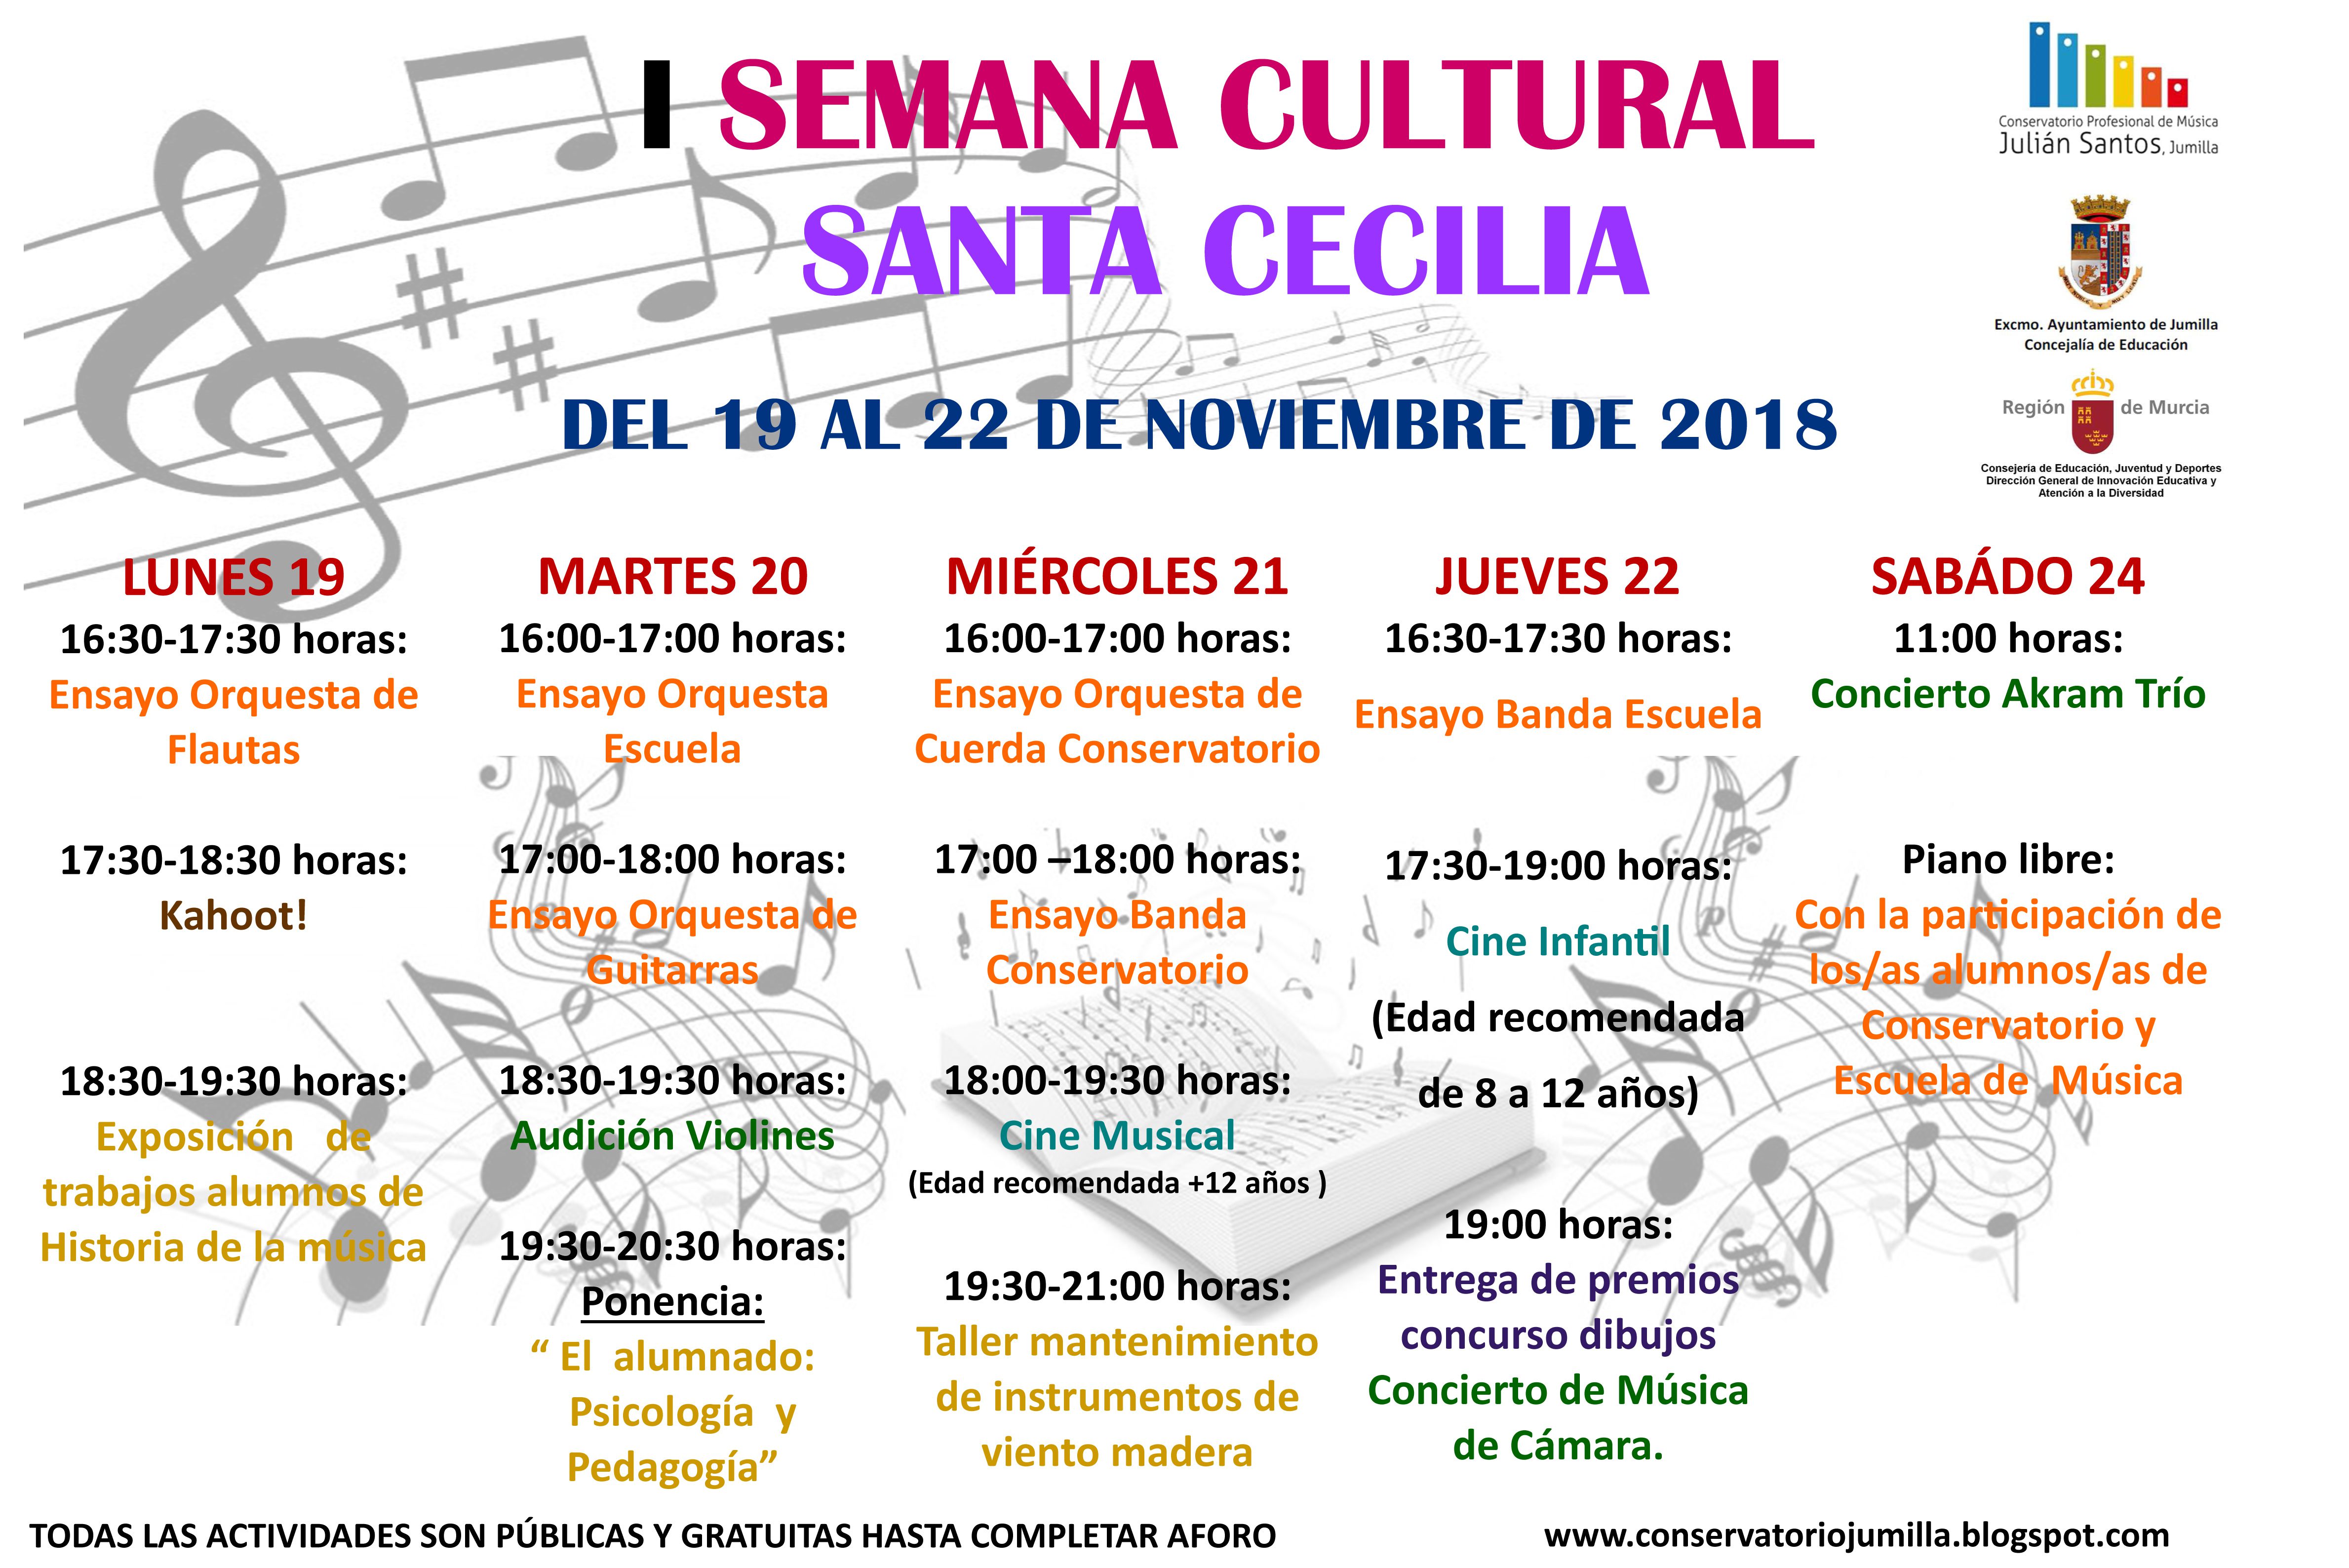 El Conservatorio celebra su I Semana Cultural